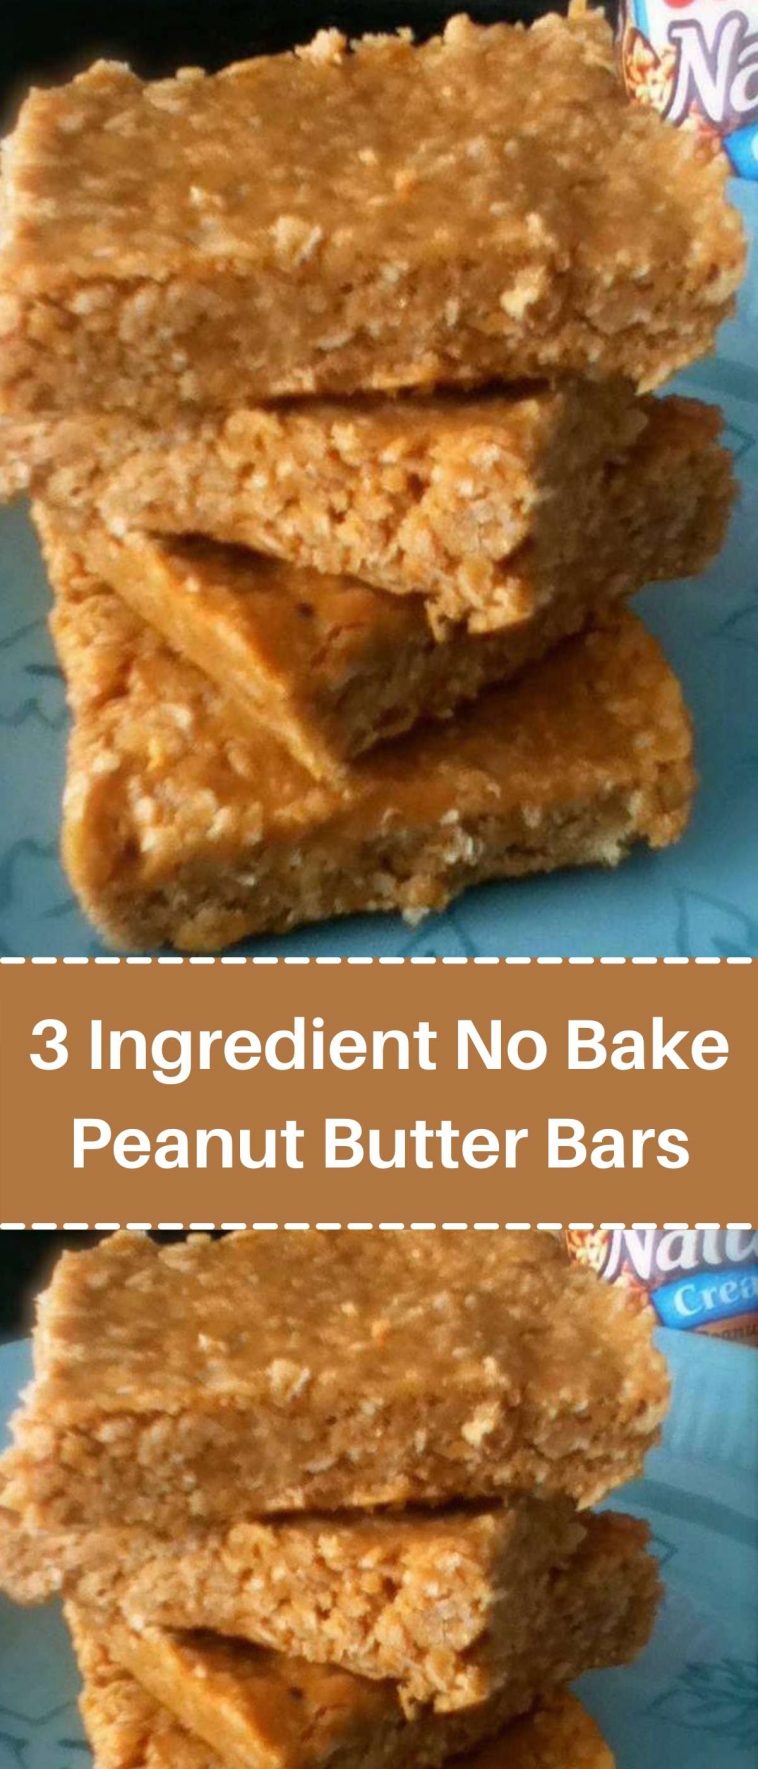 3 Ingredient No Bake Peanut Butter Bars